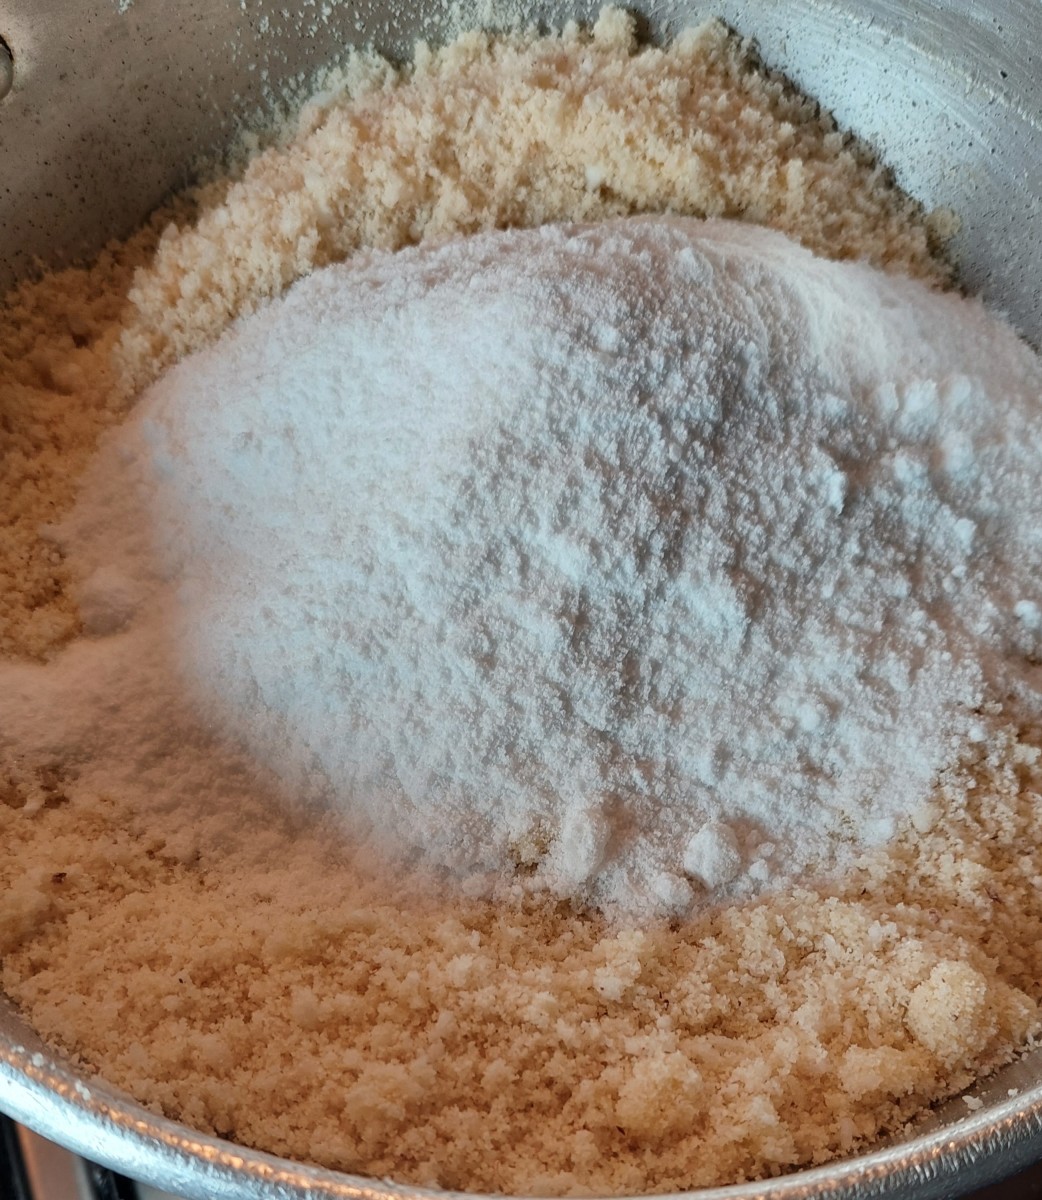 Add powdered sugar, and mix well.